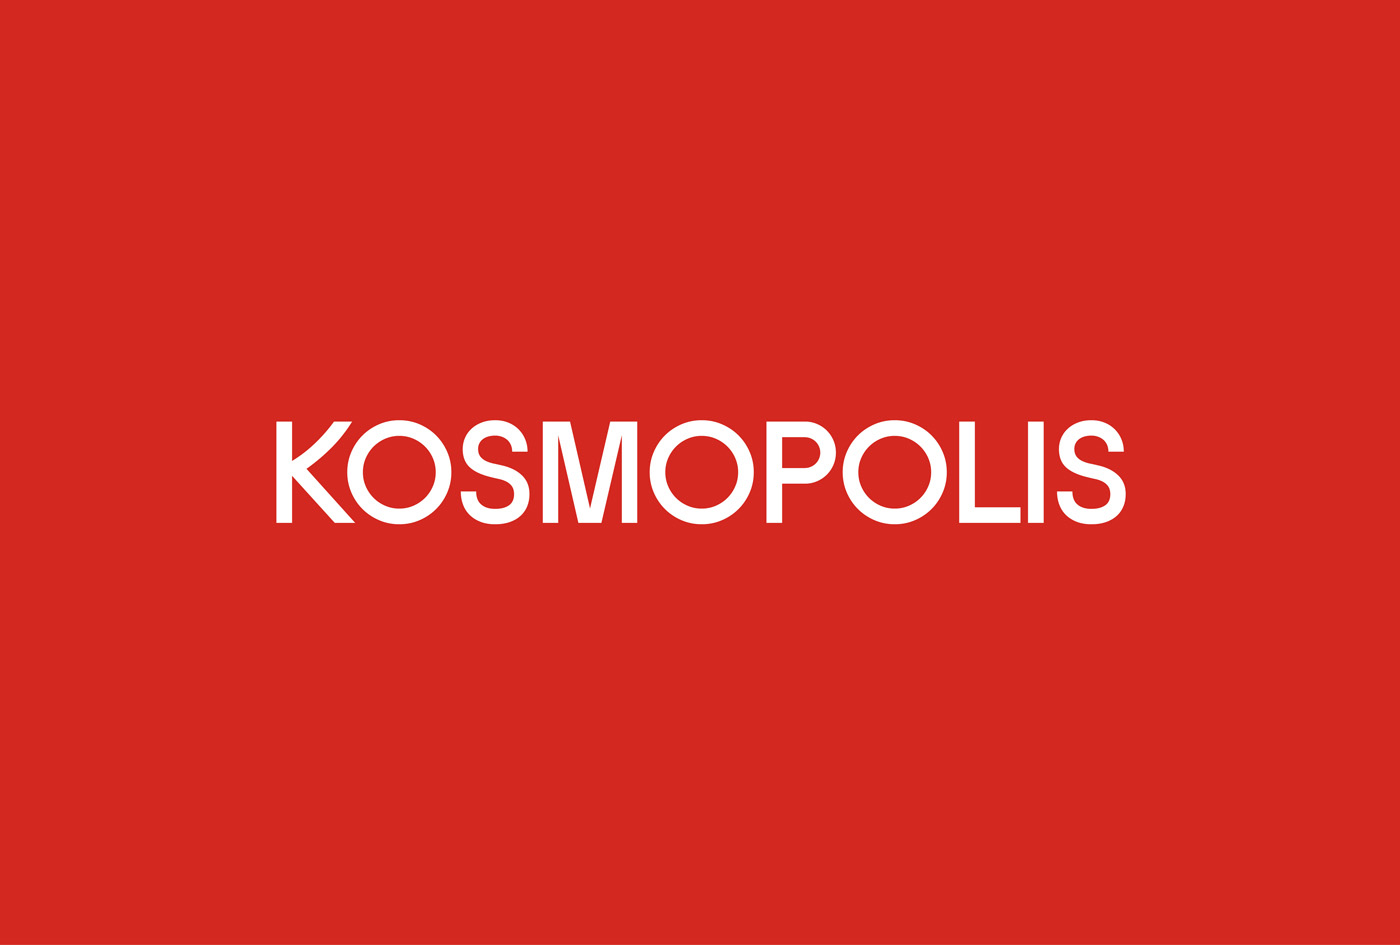 Logotype by Hey for Barcelona literature festival Kosmopolis